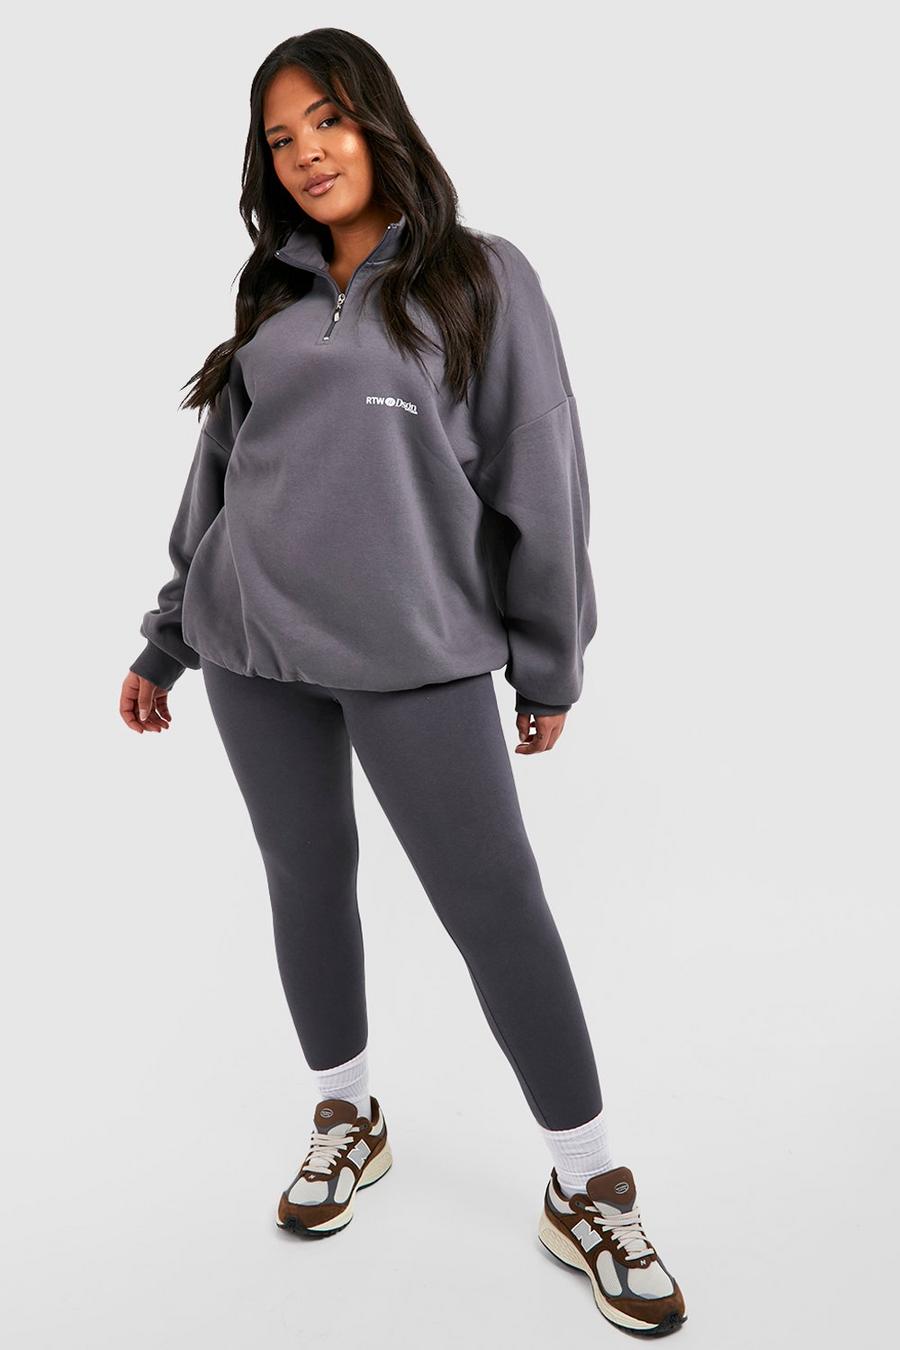 Charcoal grey Micro Oversized Dsgn Half Zip Sweatshirt And Legging Set